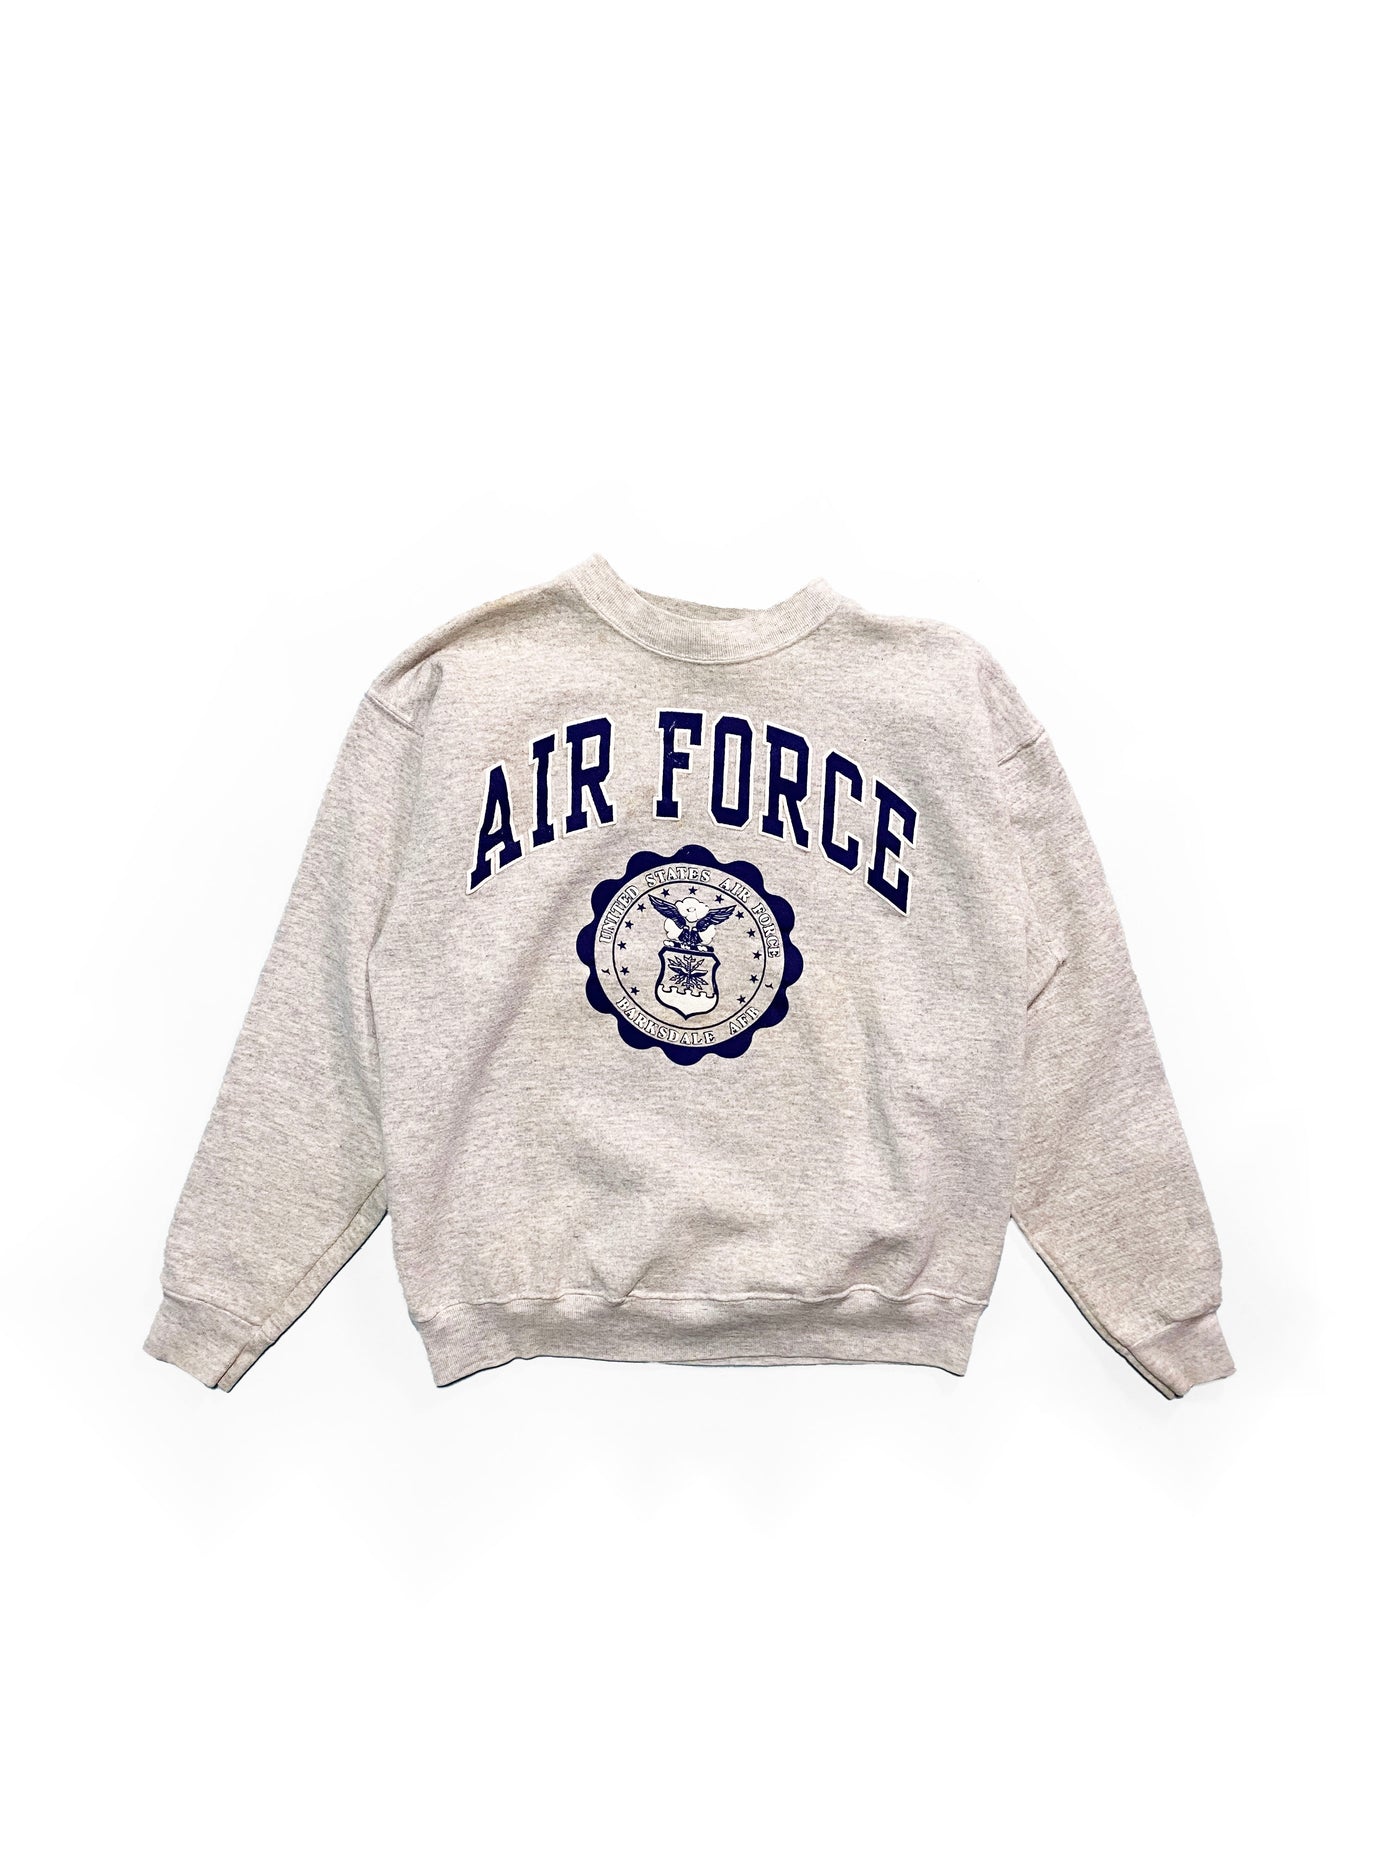 Vintage 90s Air Force Crewneck